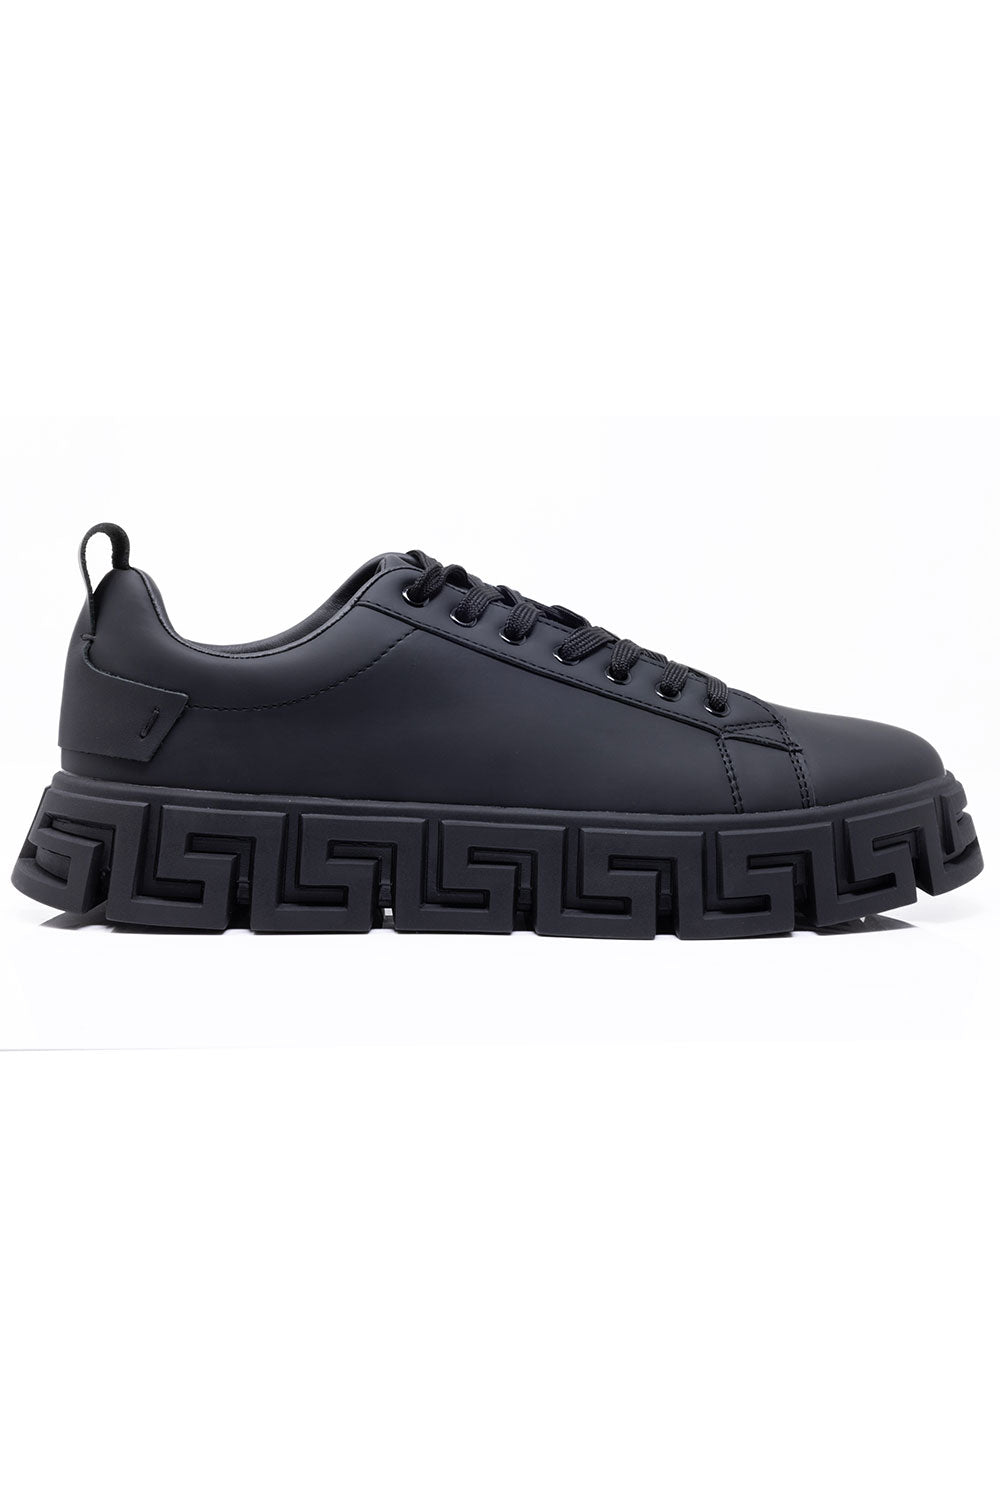 Barabas Men's Premium Greek Key Pattern Sole Sneakers 4SK06 Black